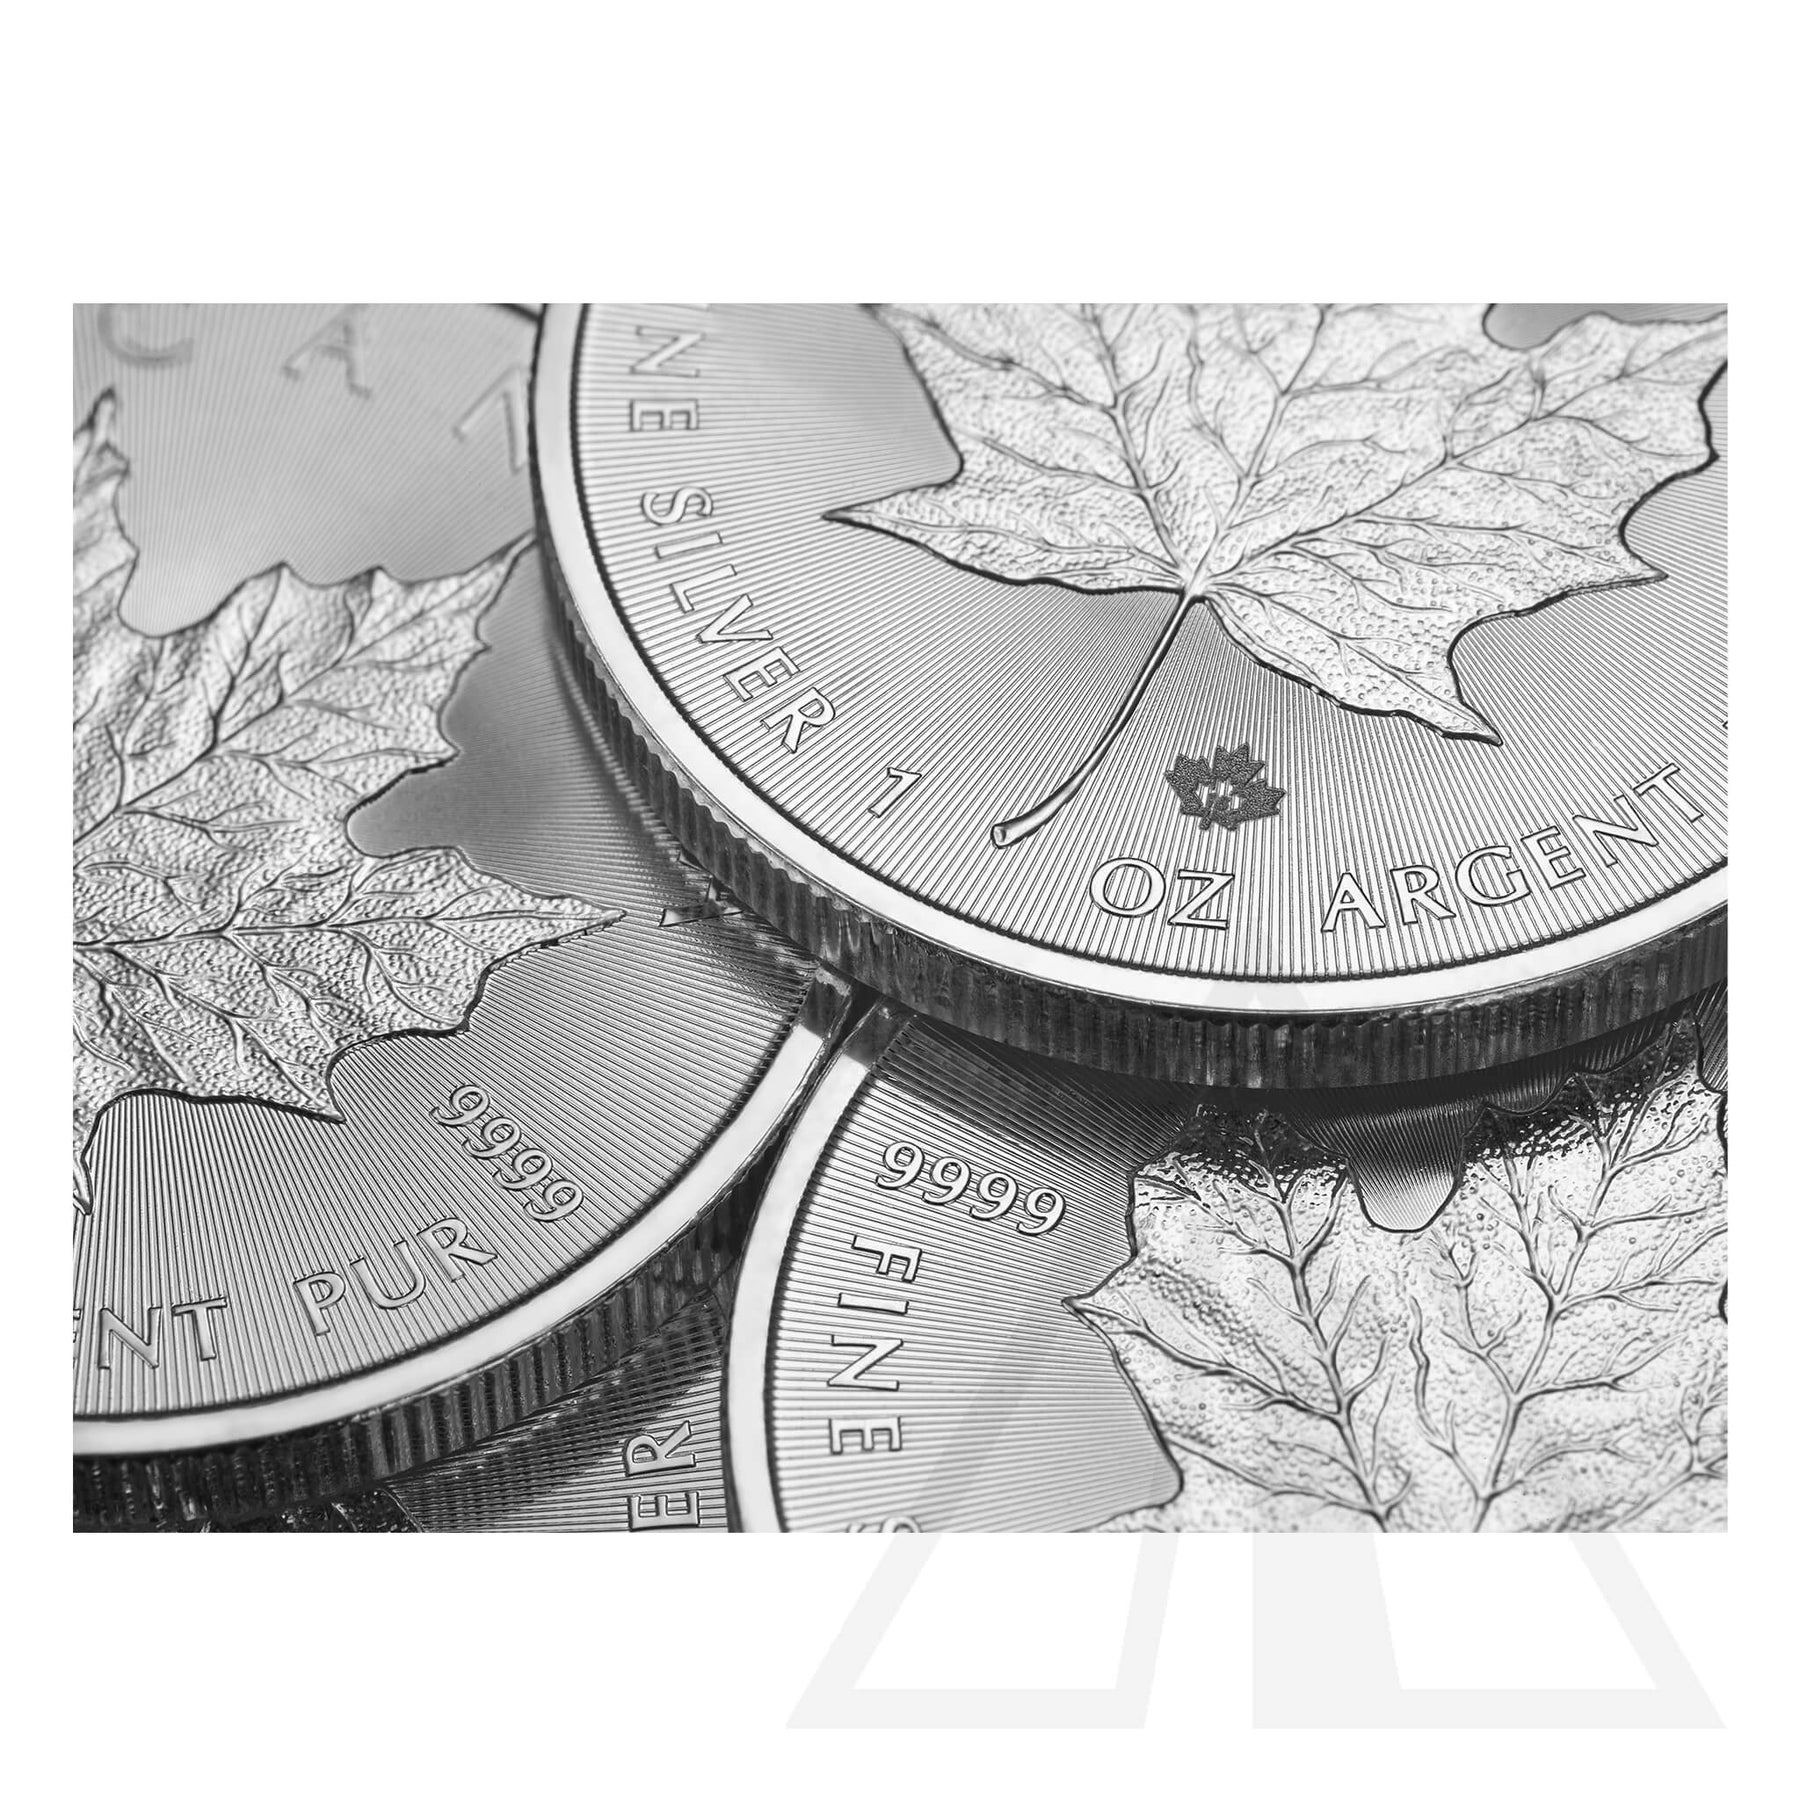 1 Oz Silver Maple Leaf Coin 2023